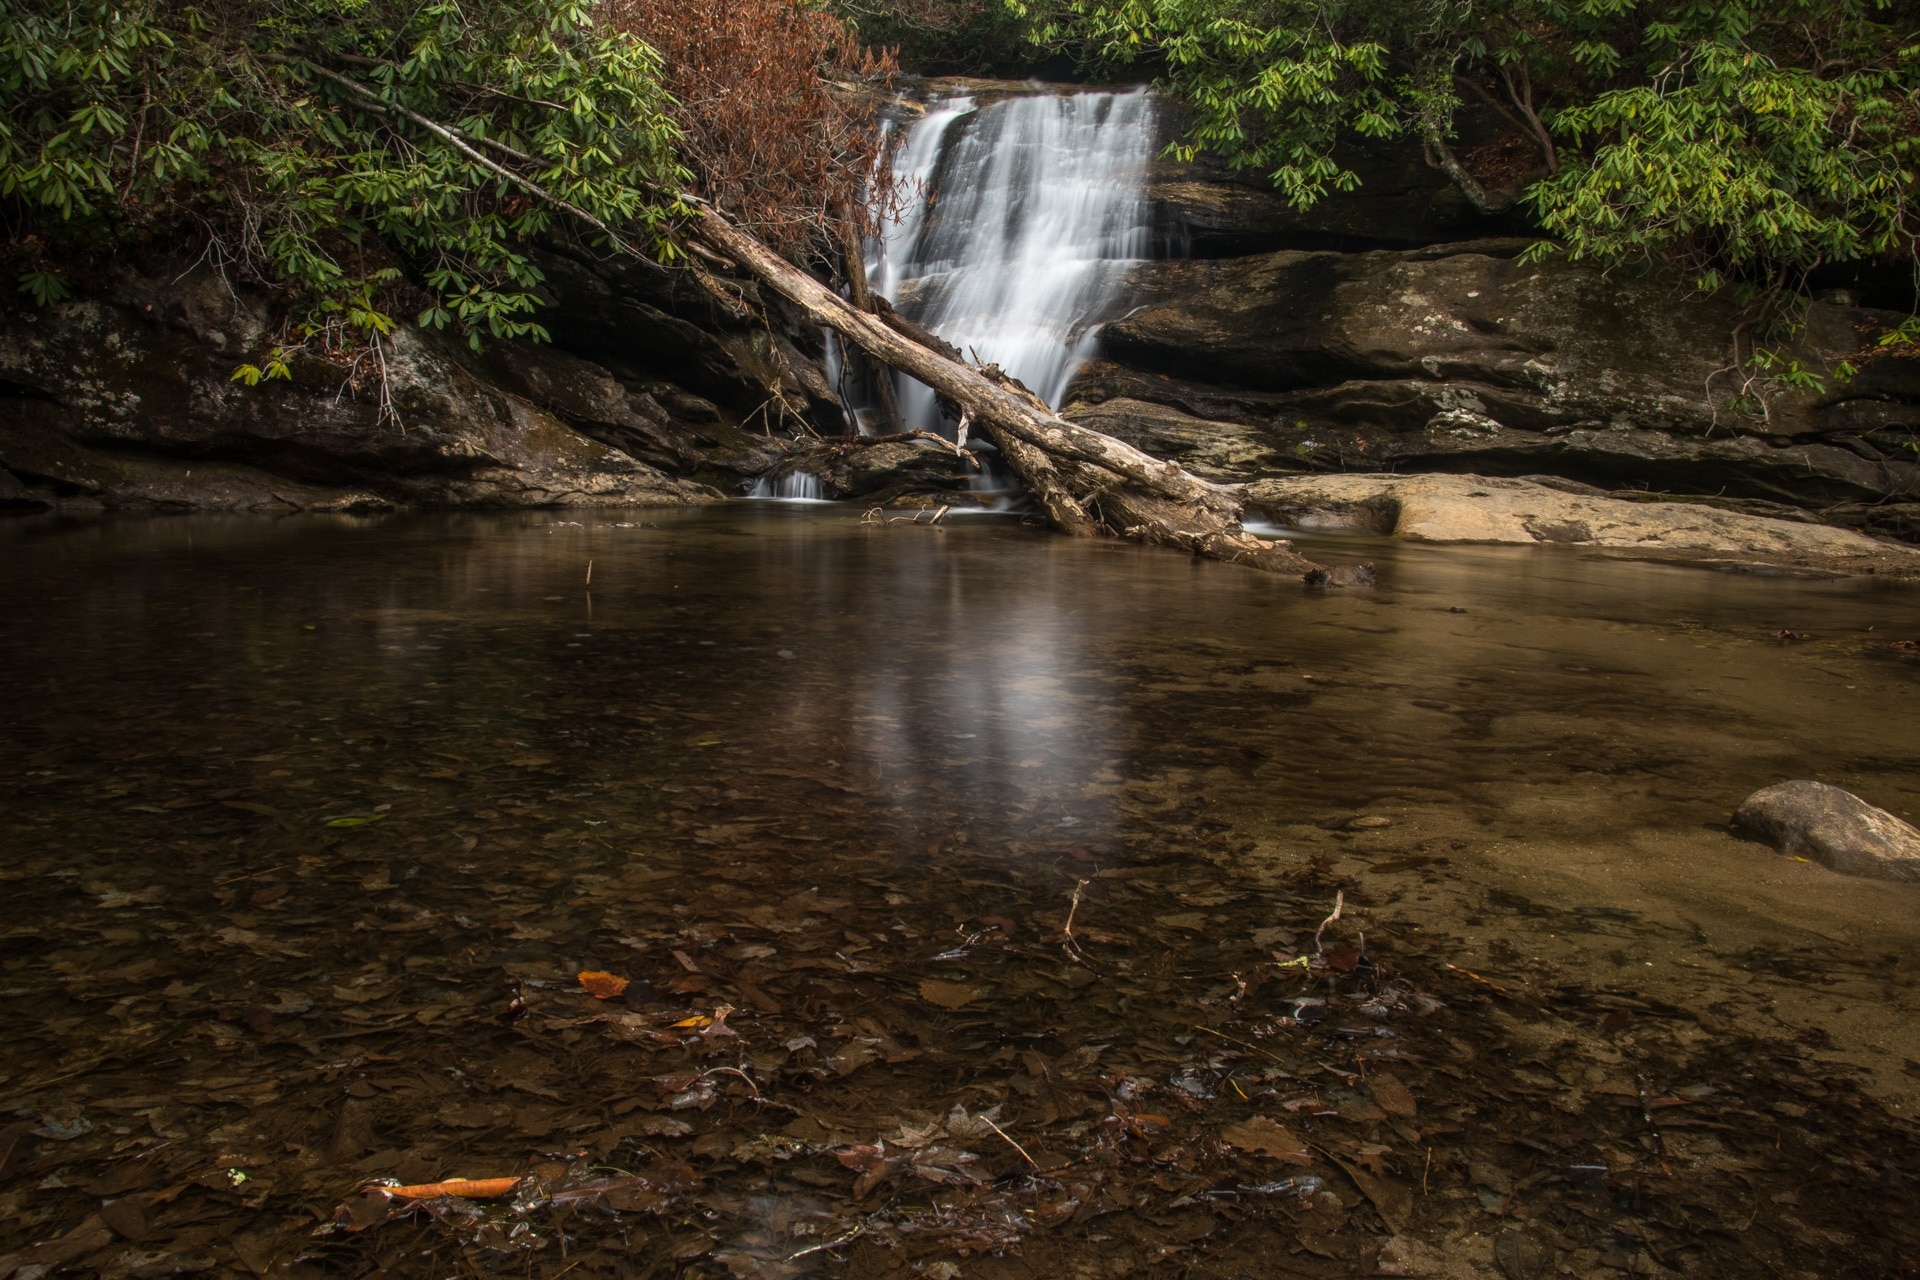 The beautiful area of multiple waterfalls calls Glen Falls near Highlands, NC.  View a video guide of the falls here:  https://www.hdcarolina.com/episode/glen-falls